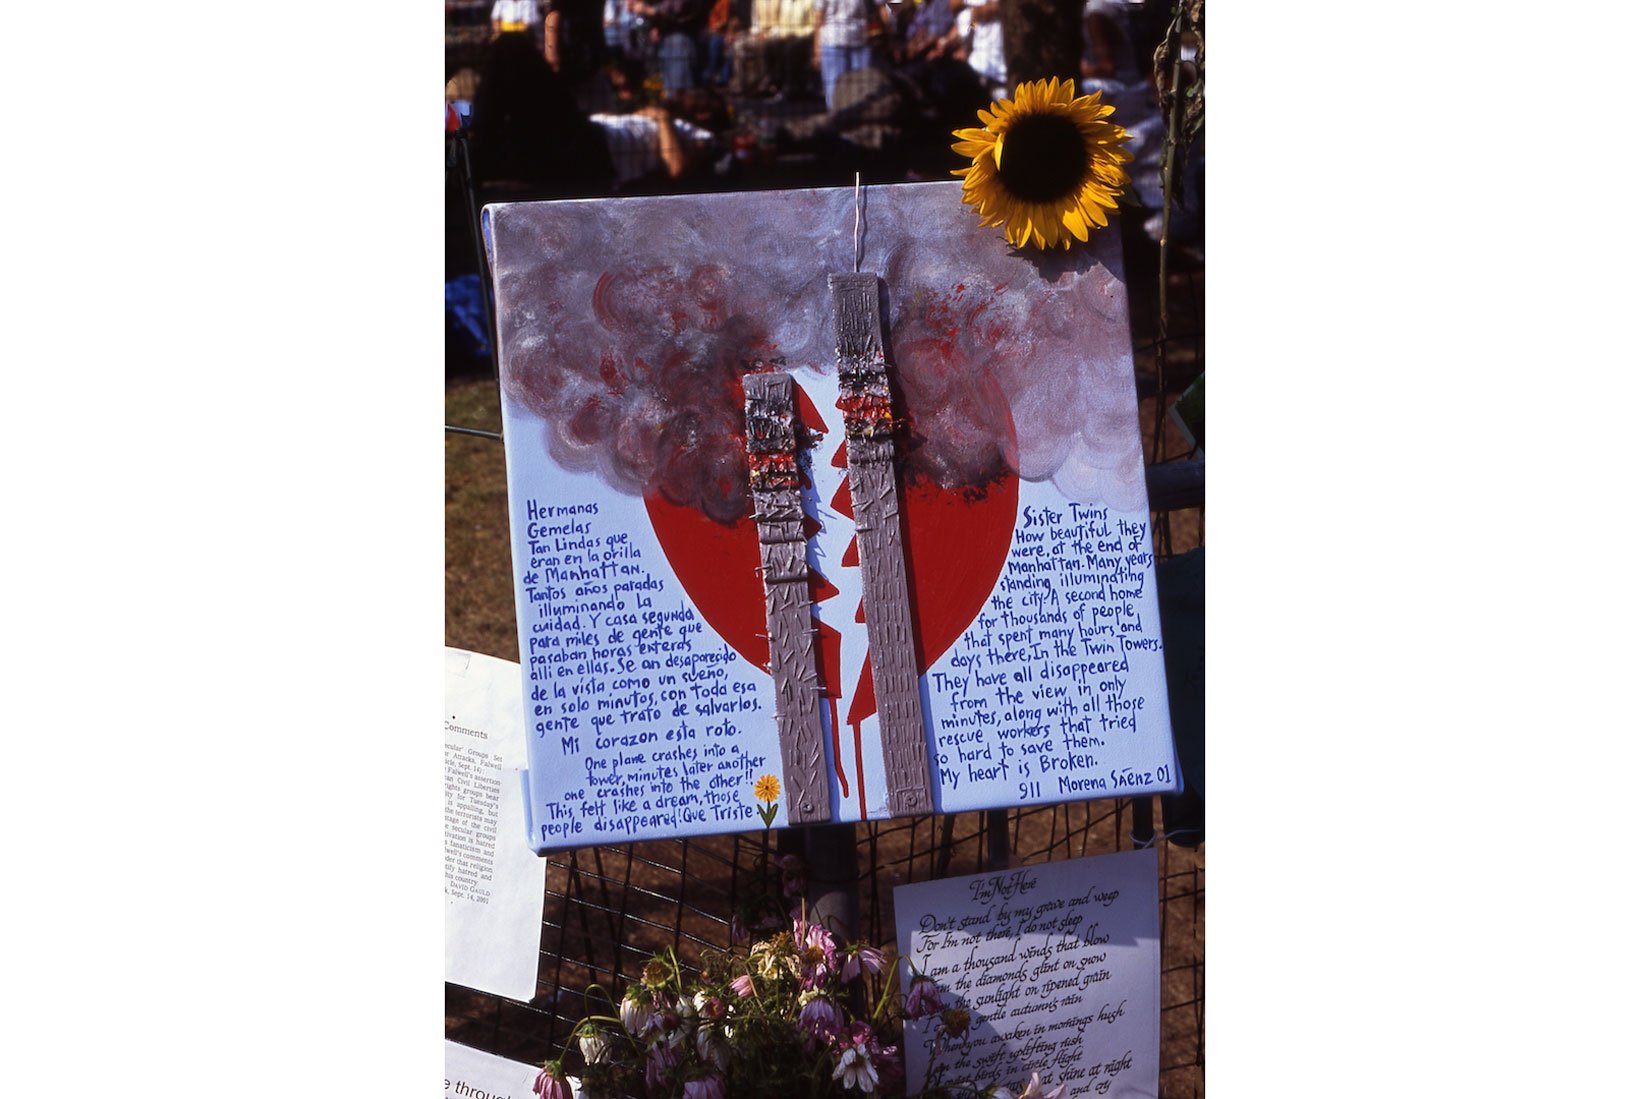 9/11 Memorial in Union Square NYC